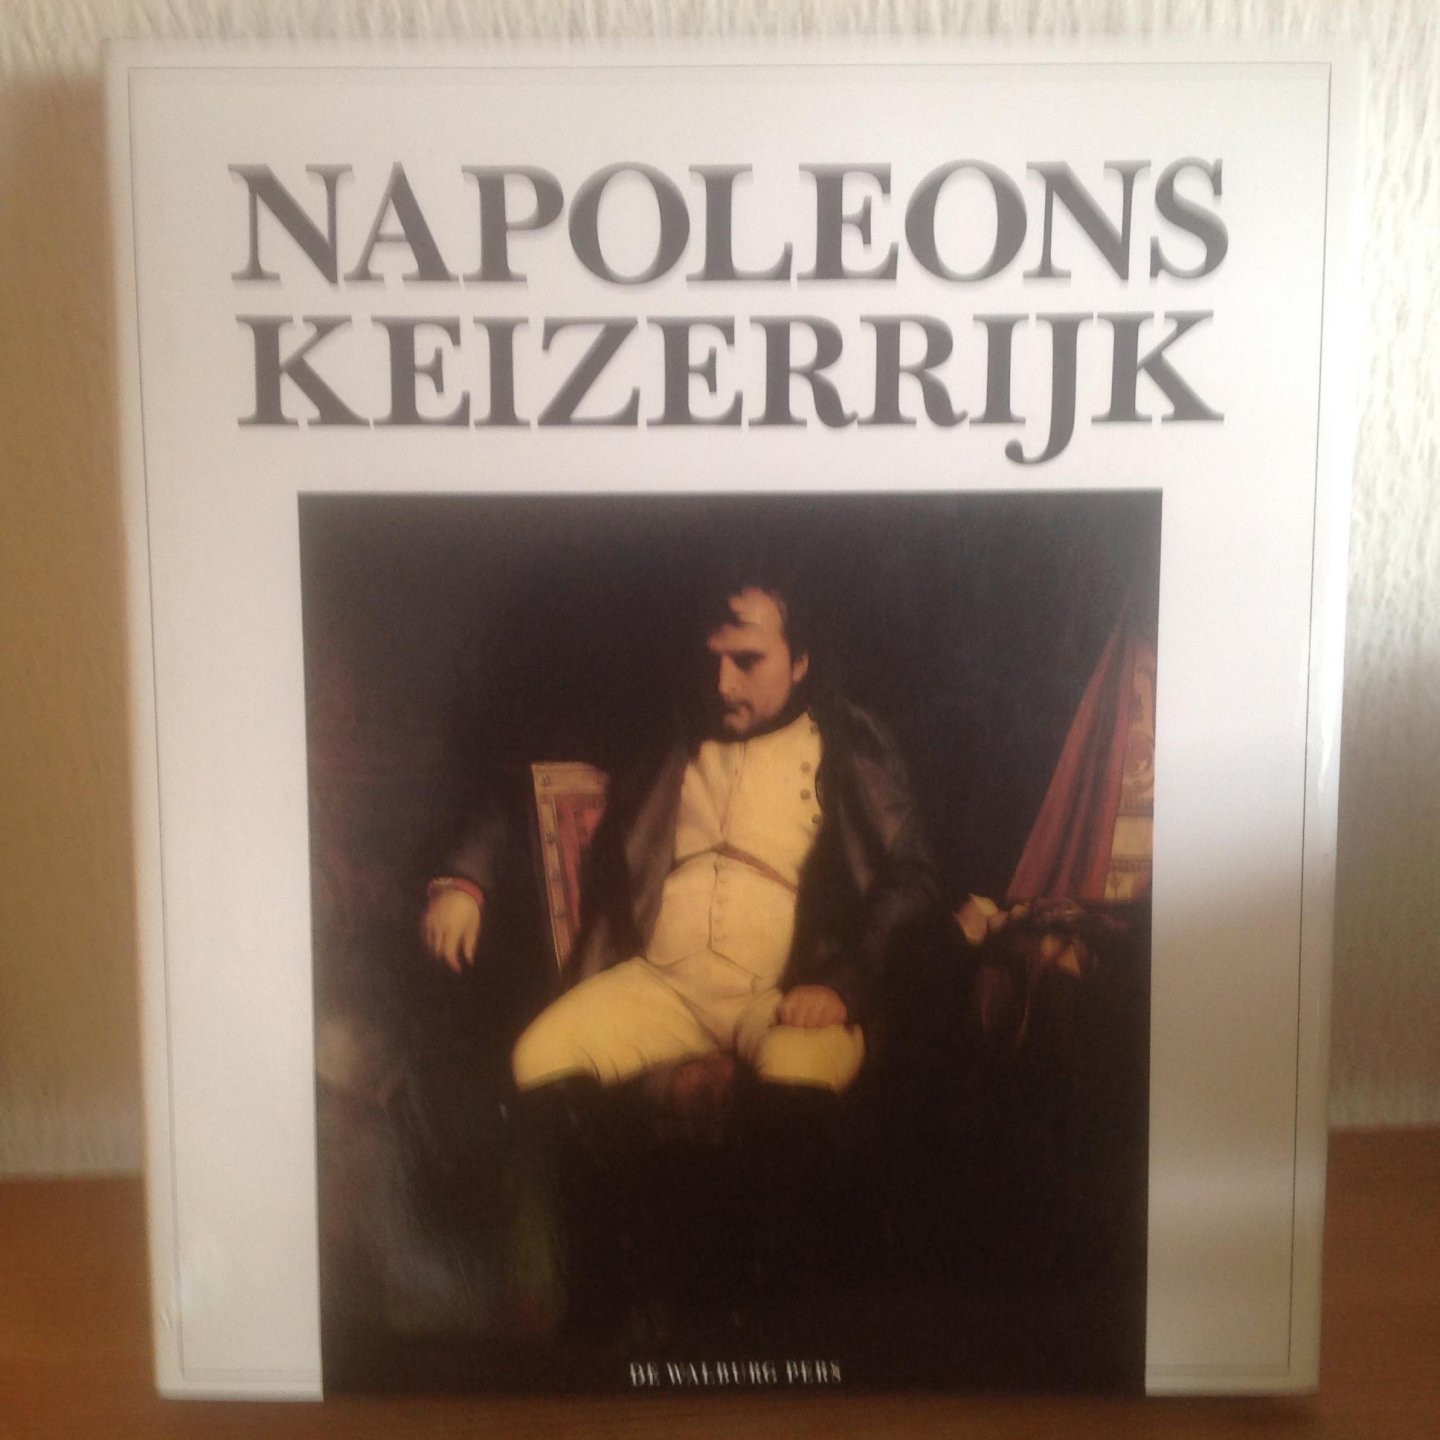 Markov - Napoleons keizerryk / druk 1